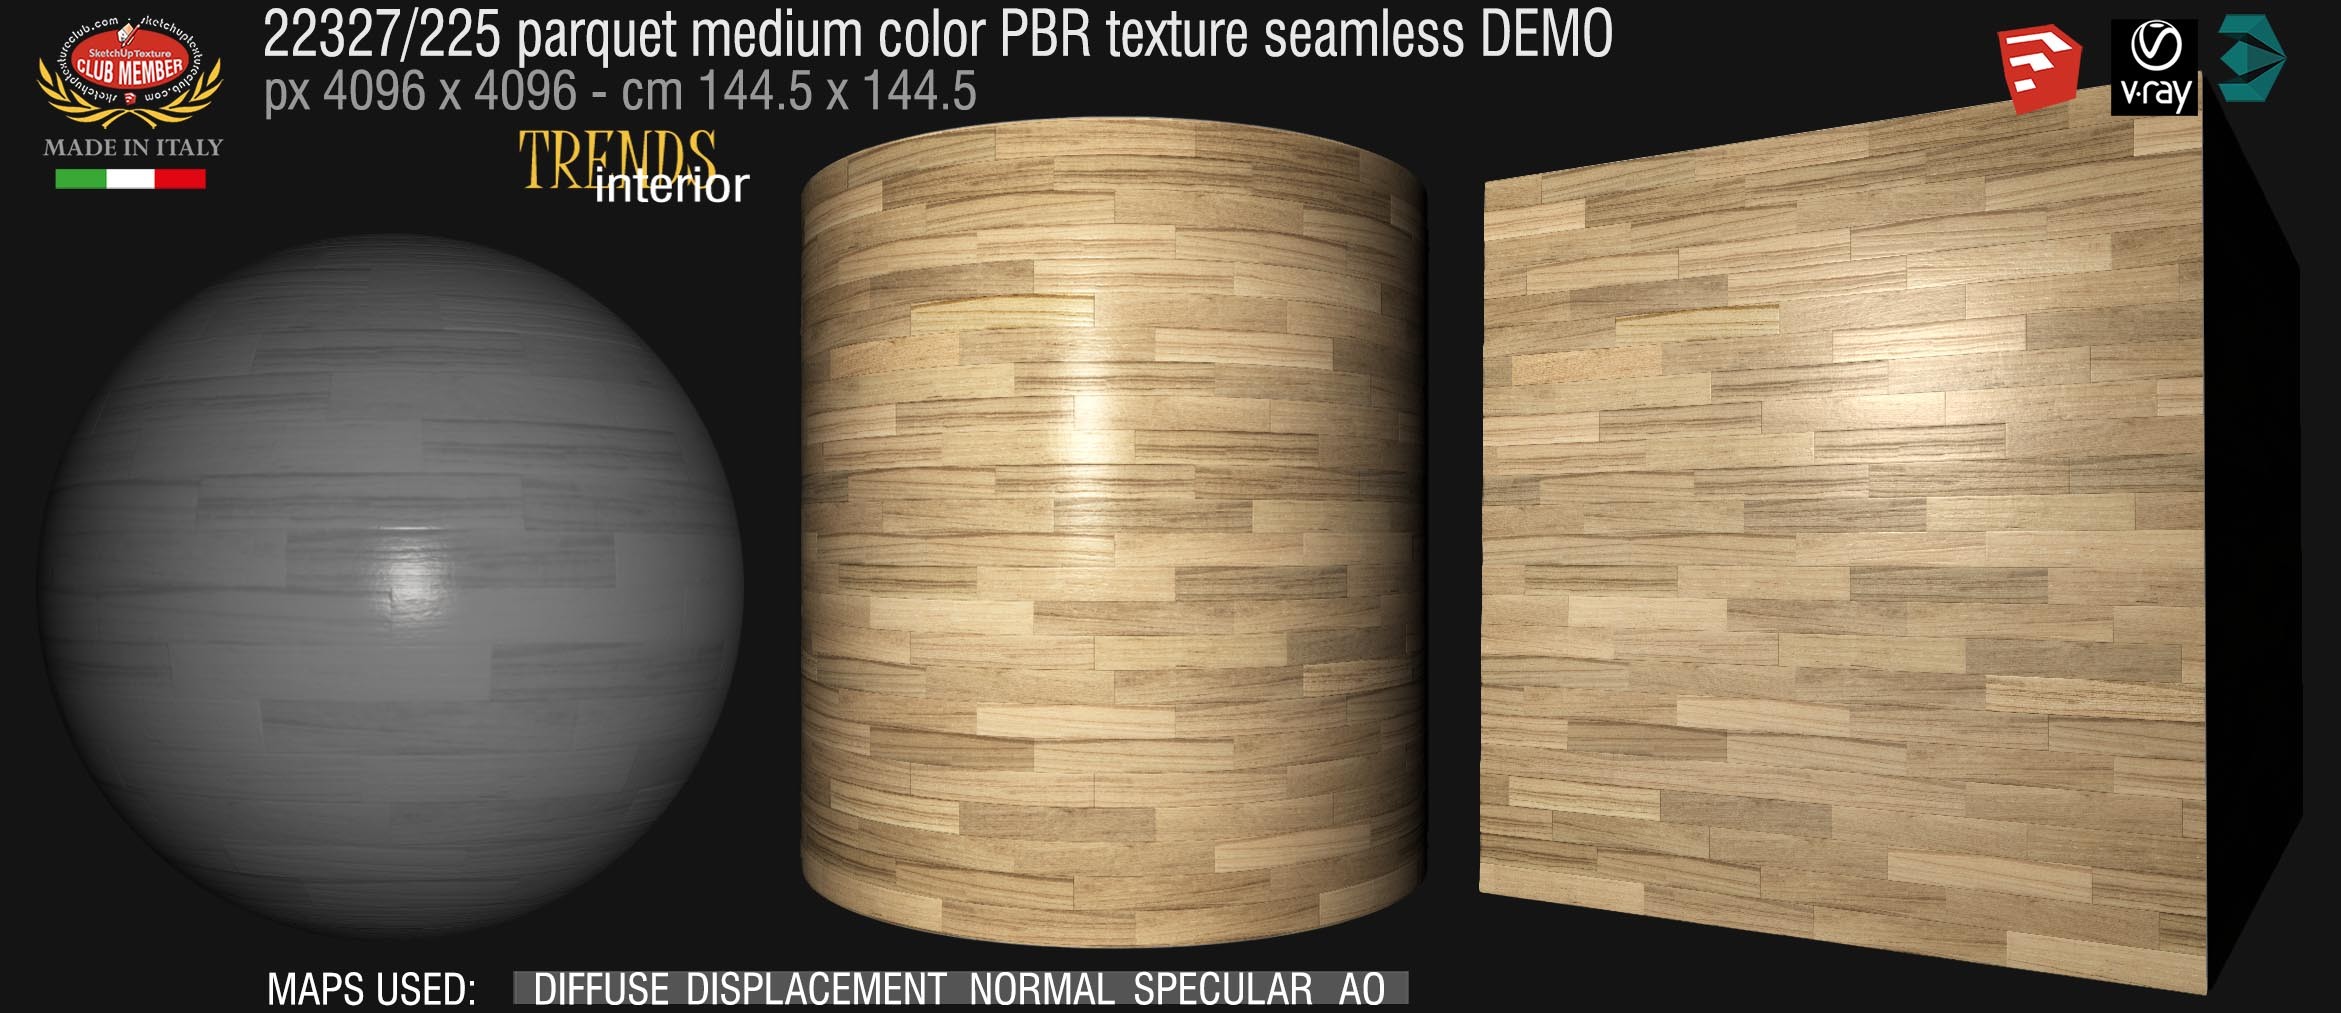 22327_225 parquet medium color PBR texture seamless DEMO